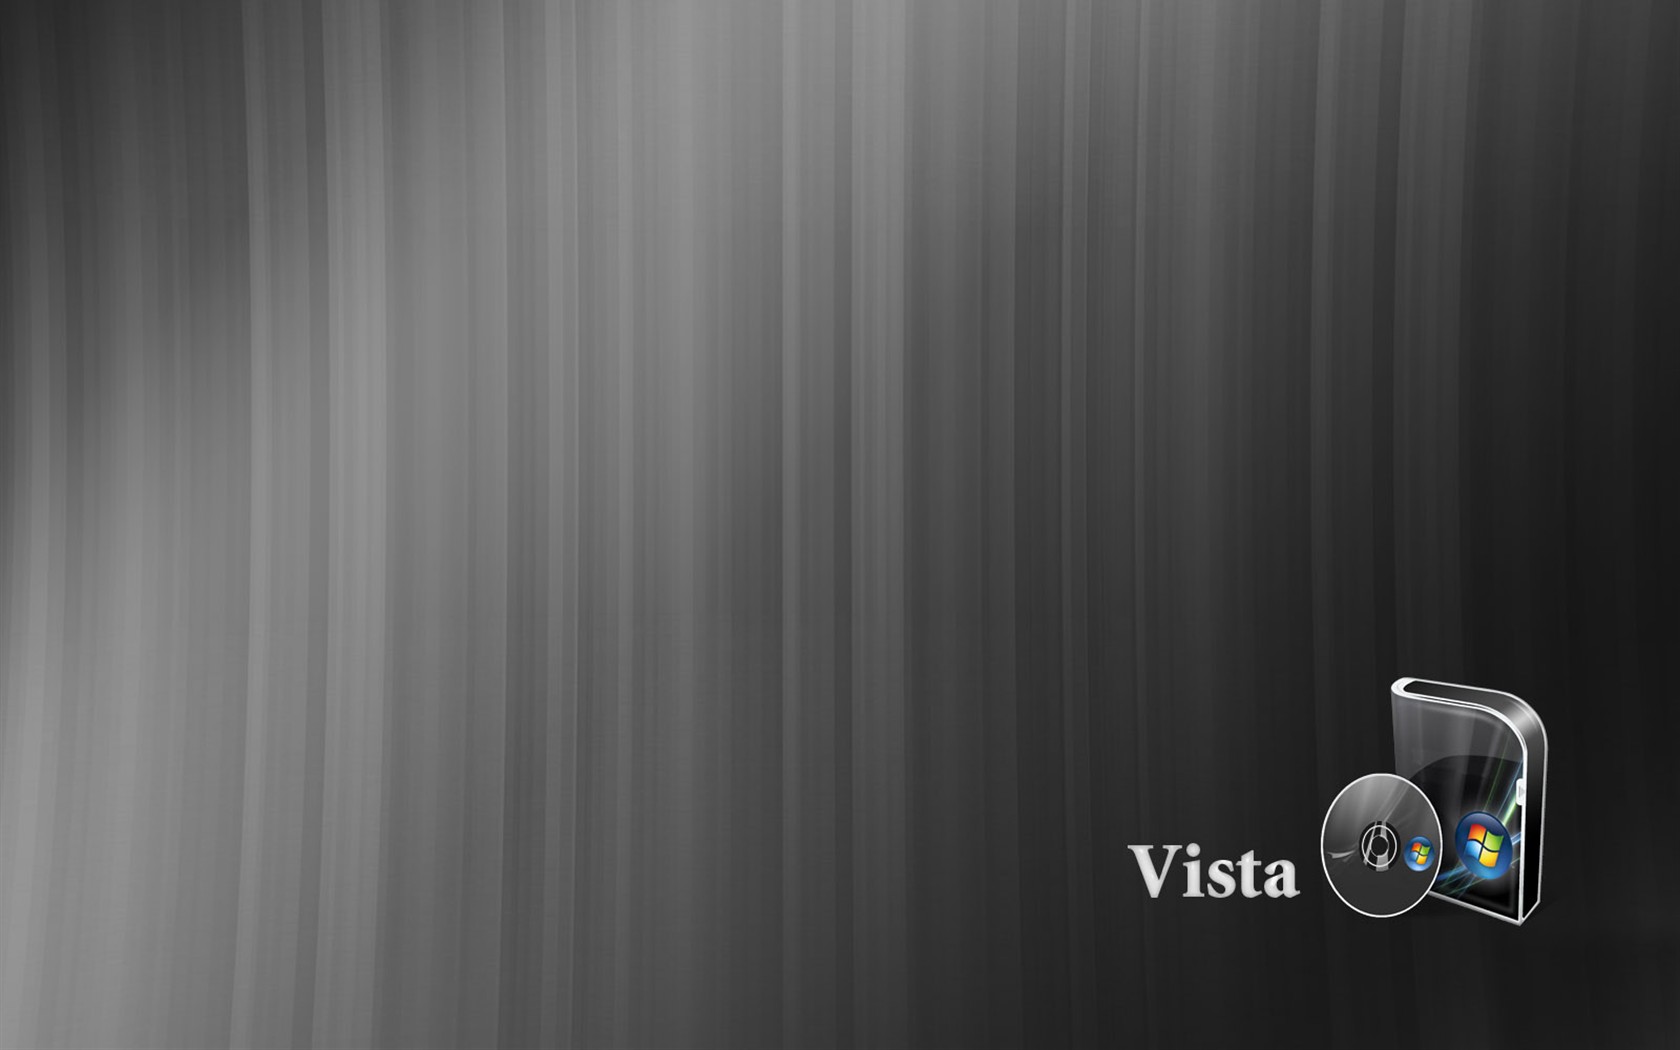  Vistaの壁紙アルバム #16 - 1680x1050